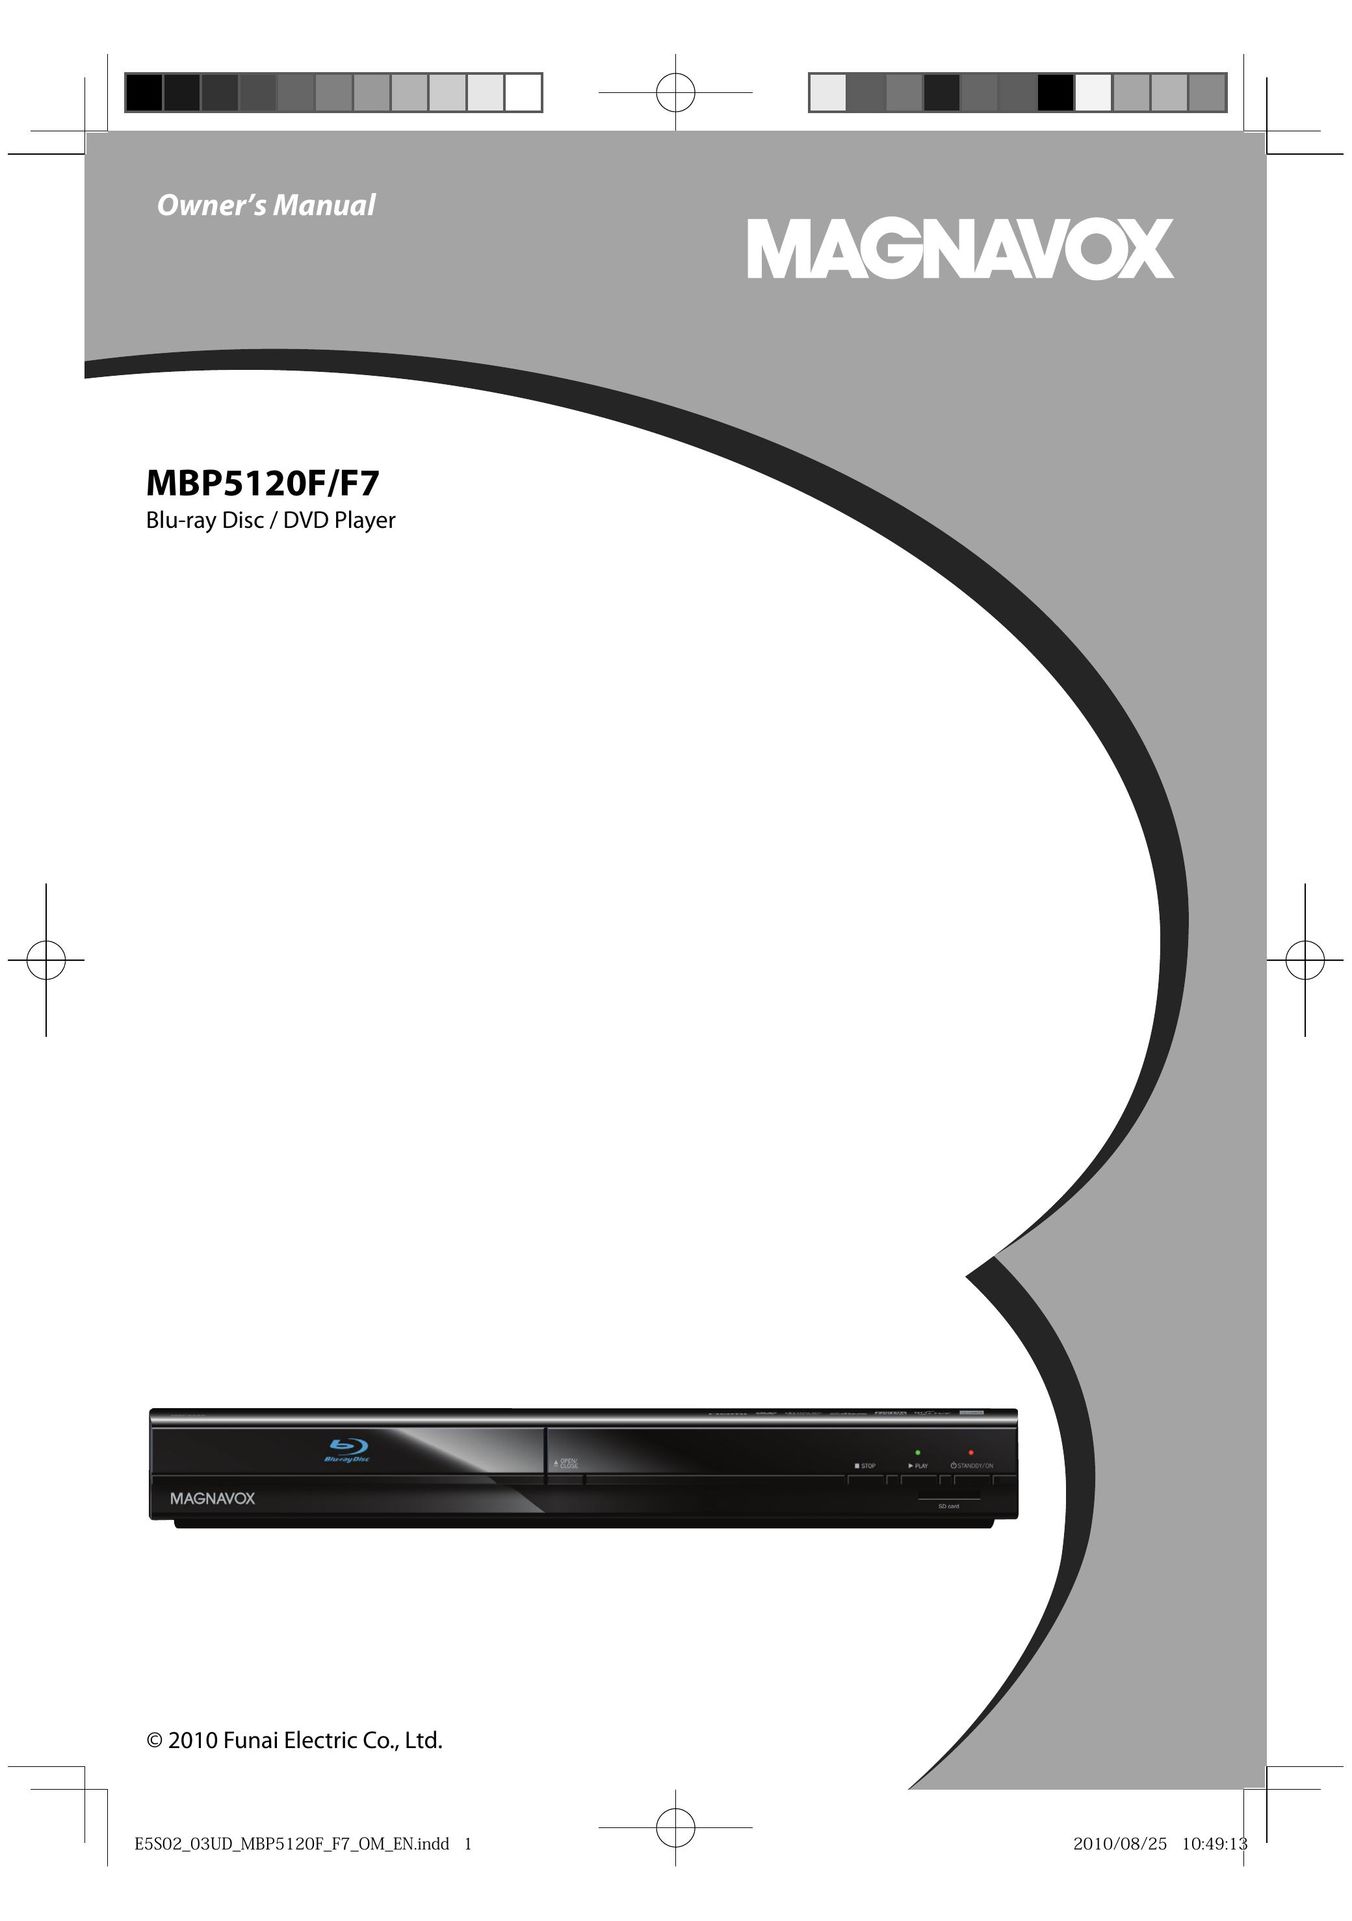 Magnavox MBP512OF/F7 Blu-ray Player User Manual